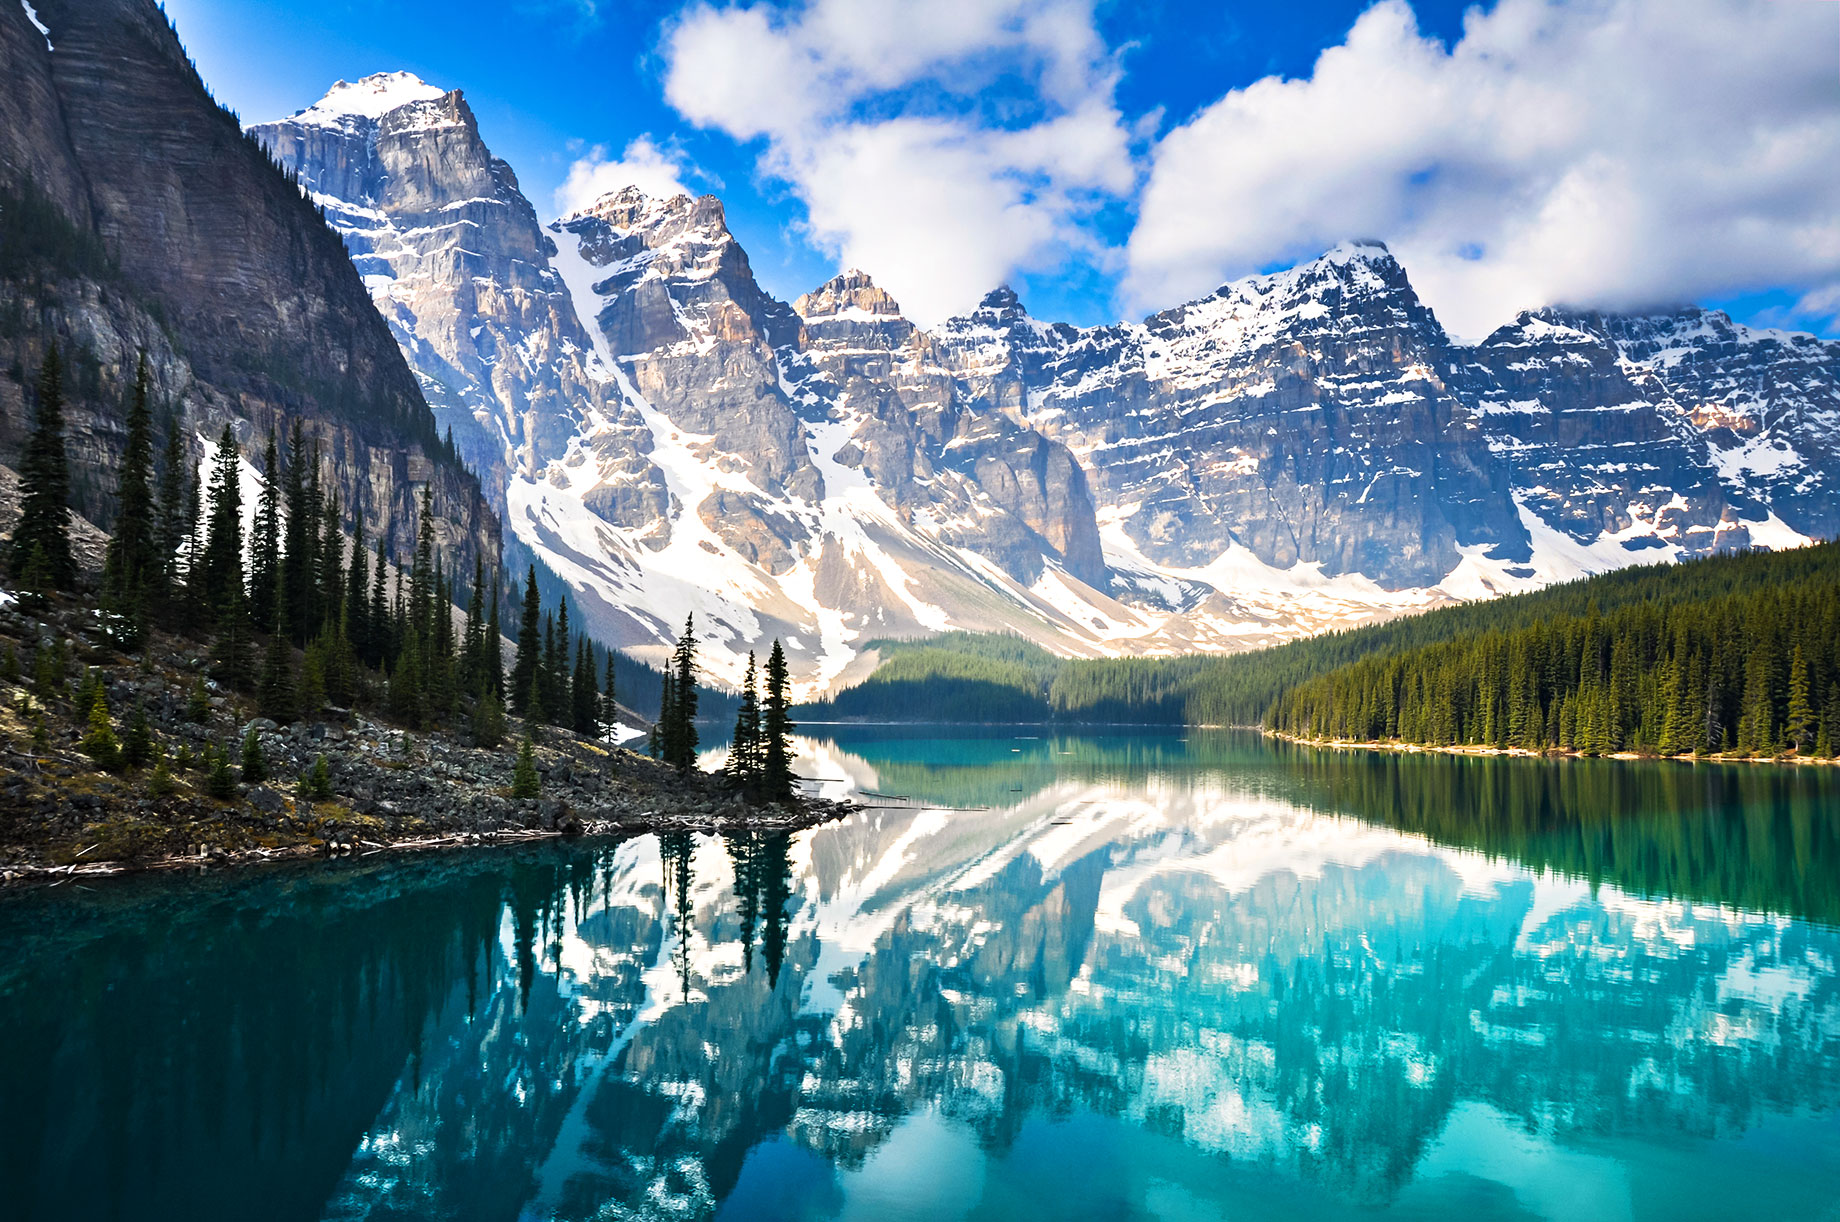 The Majestic Canadian Rockies - Moraine Lake, Banff National Park, Alberta, Canada